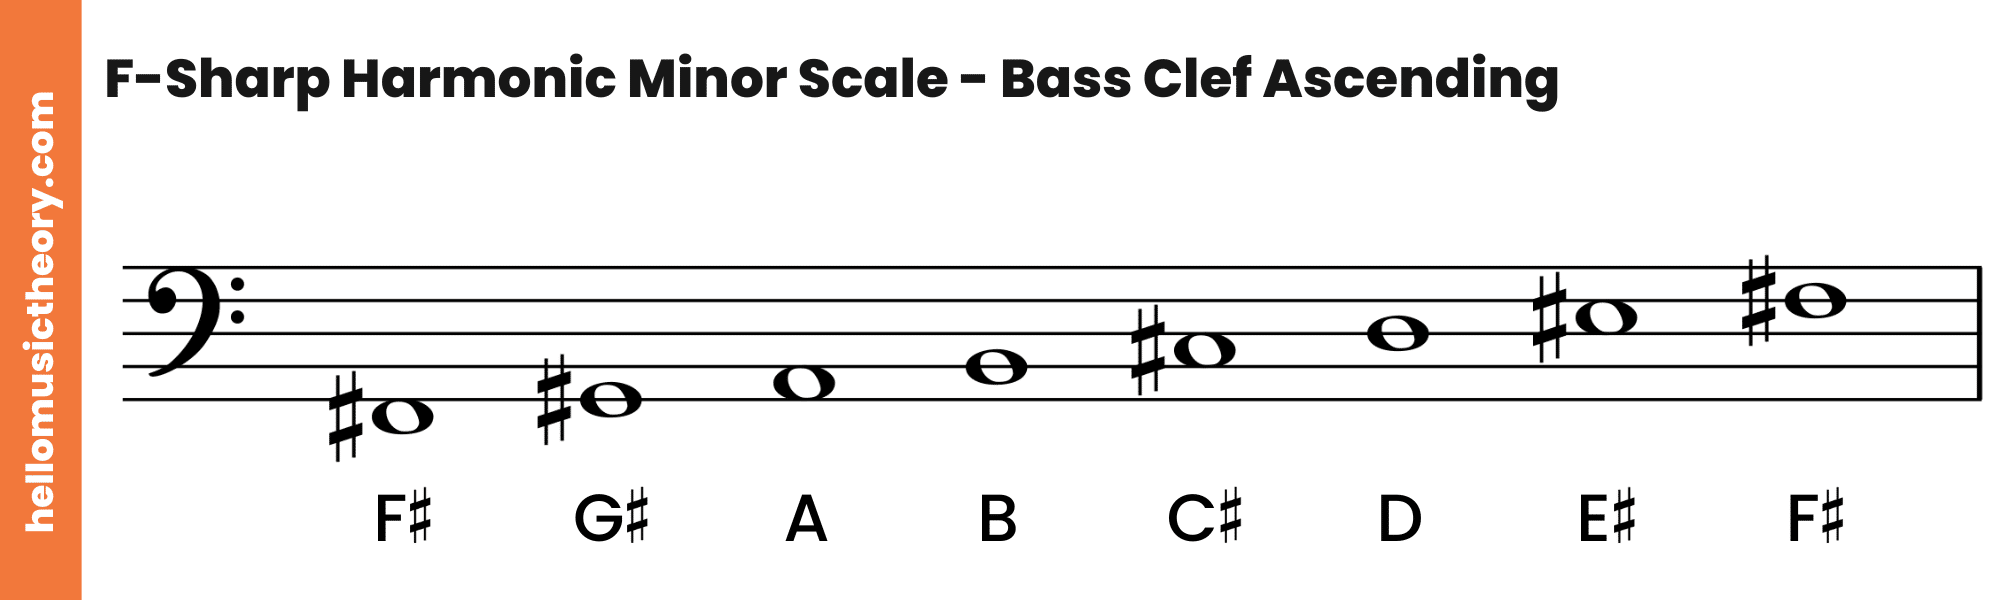 F-Sharp Harmonic Minor Scale Bass Clef Ascending